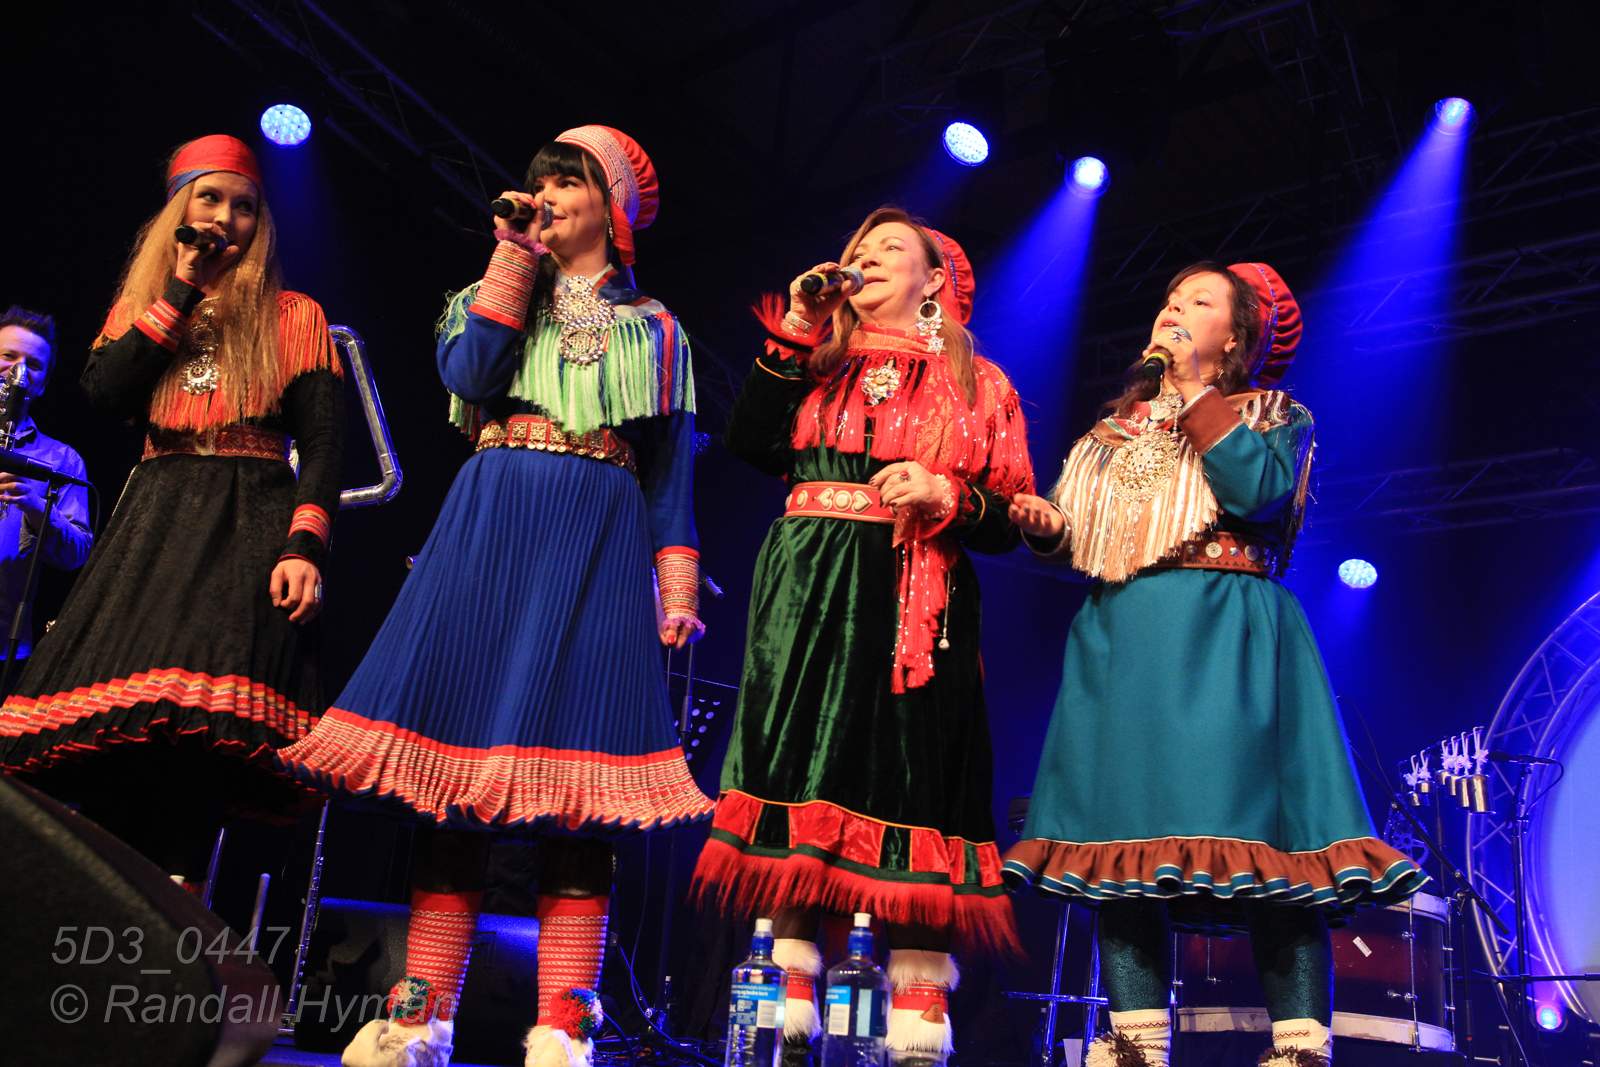 Sami women perform at festival